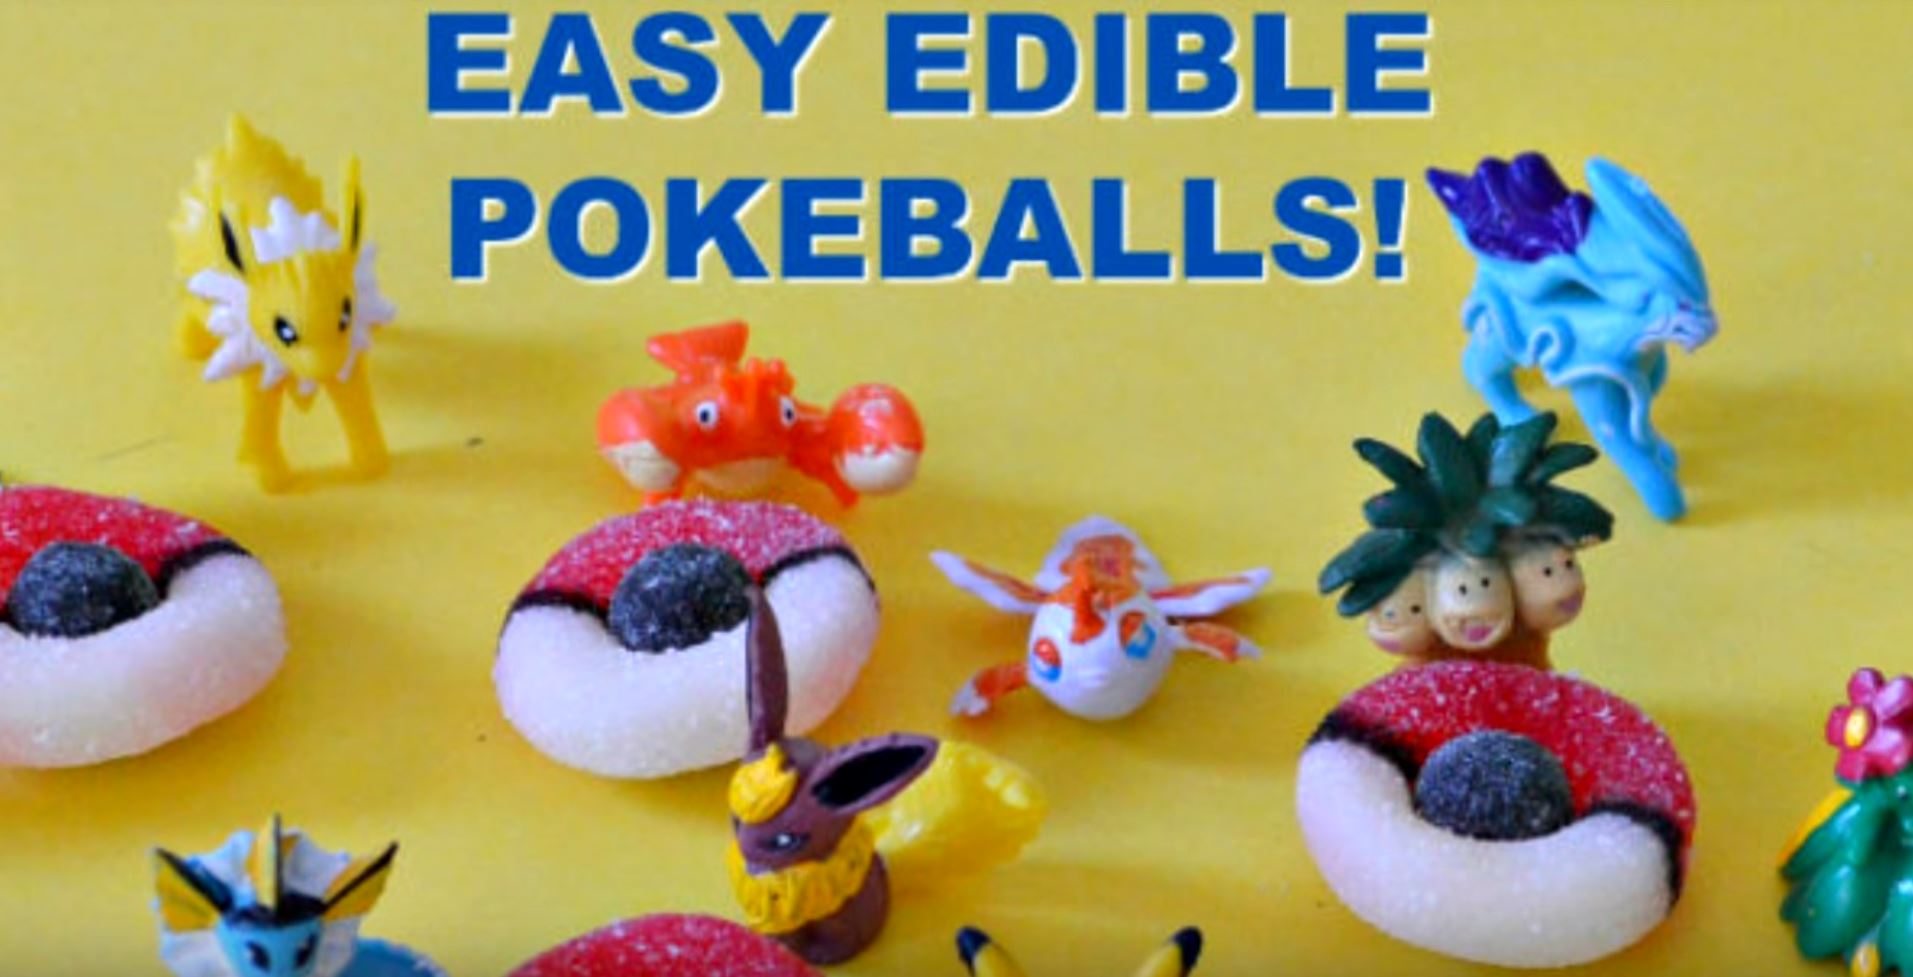 Edible Pokeball Candies